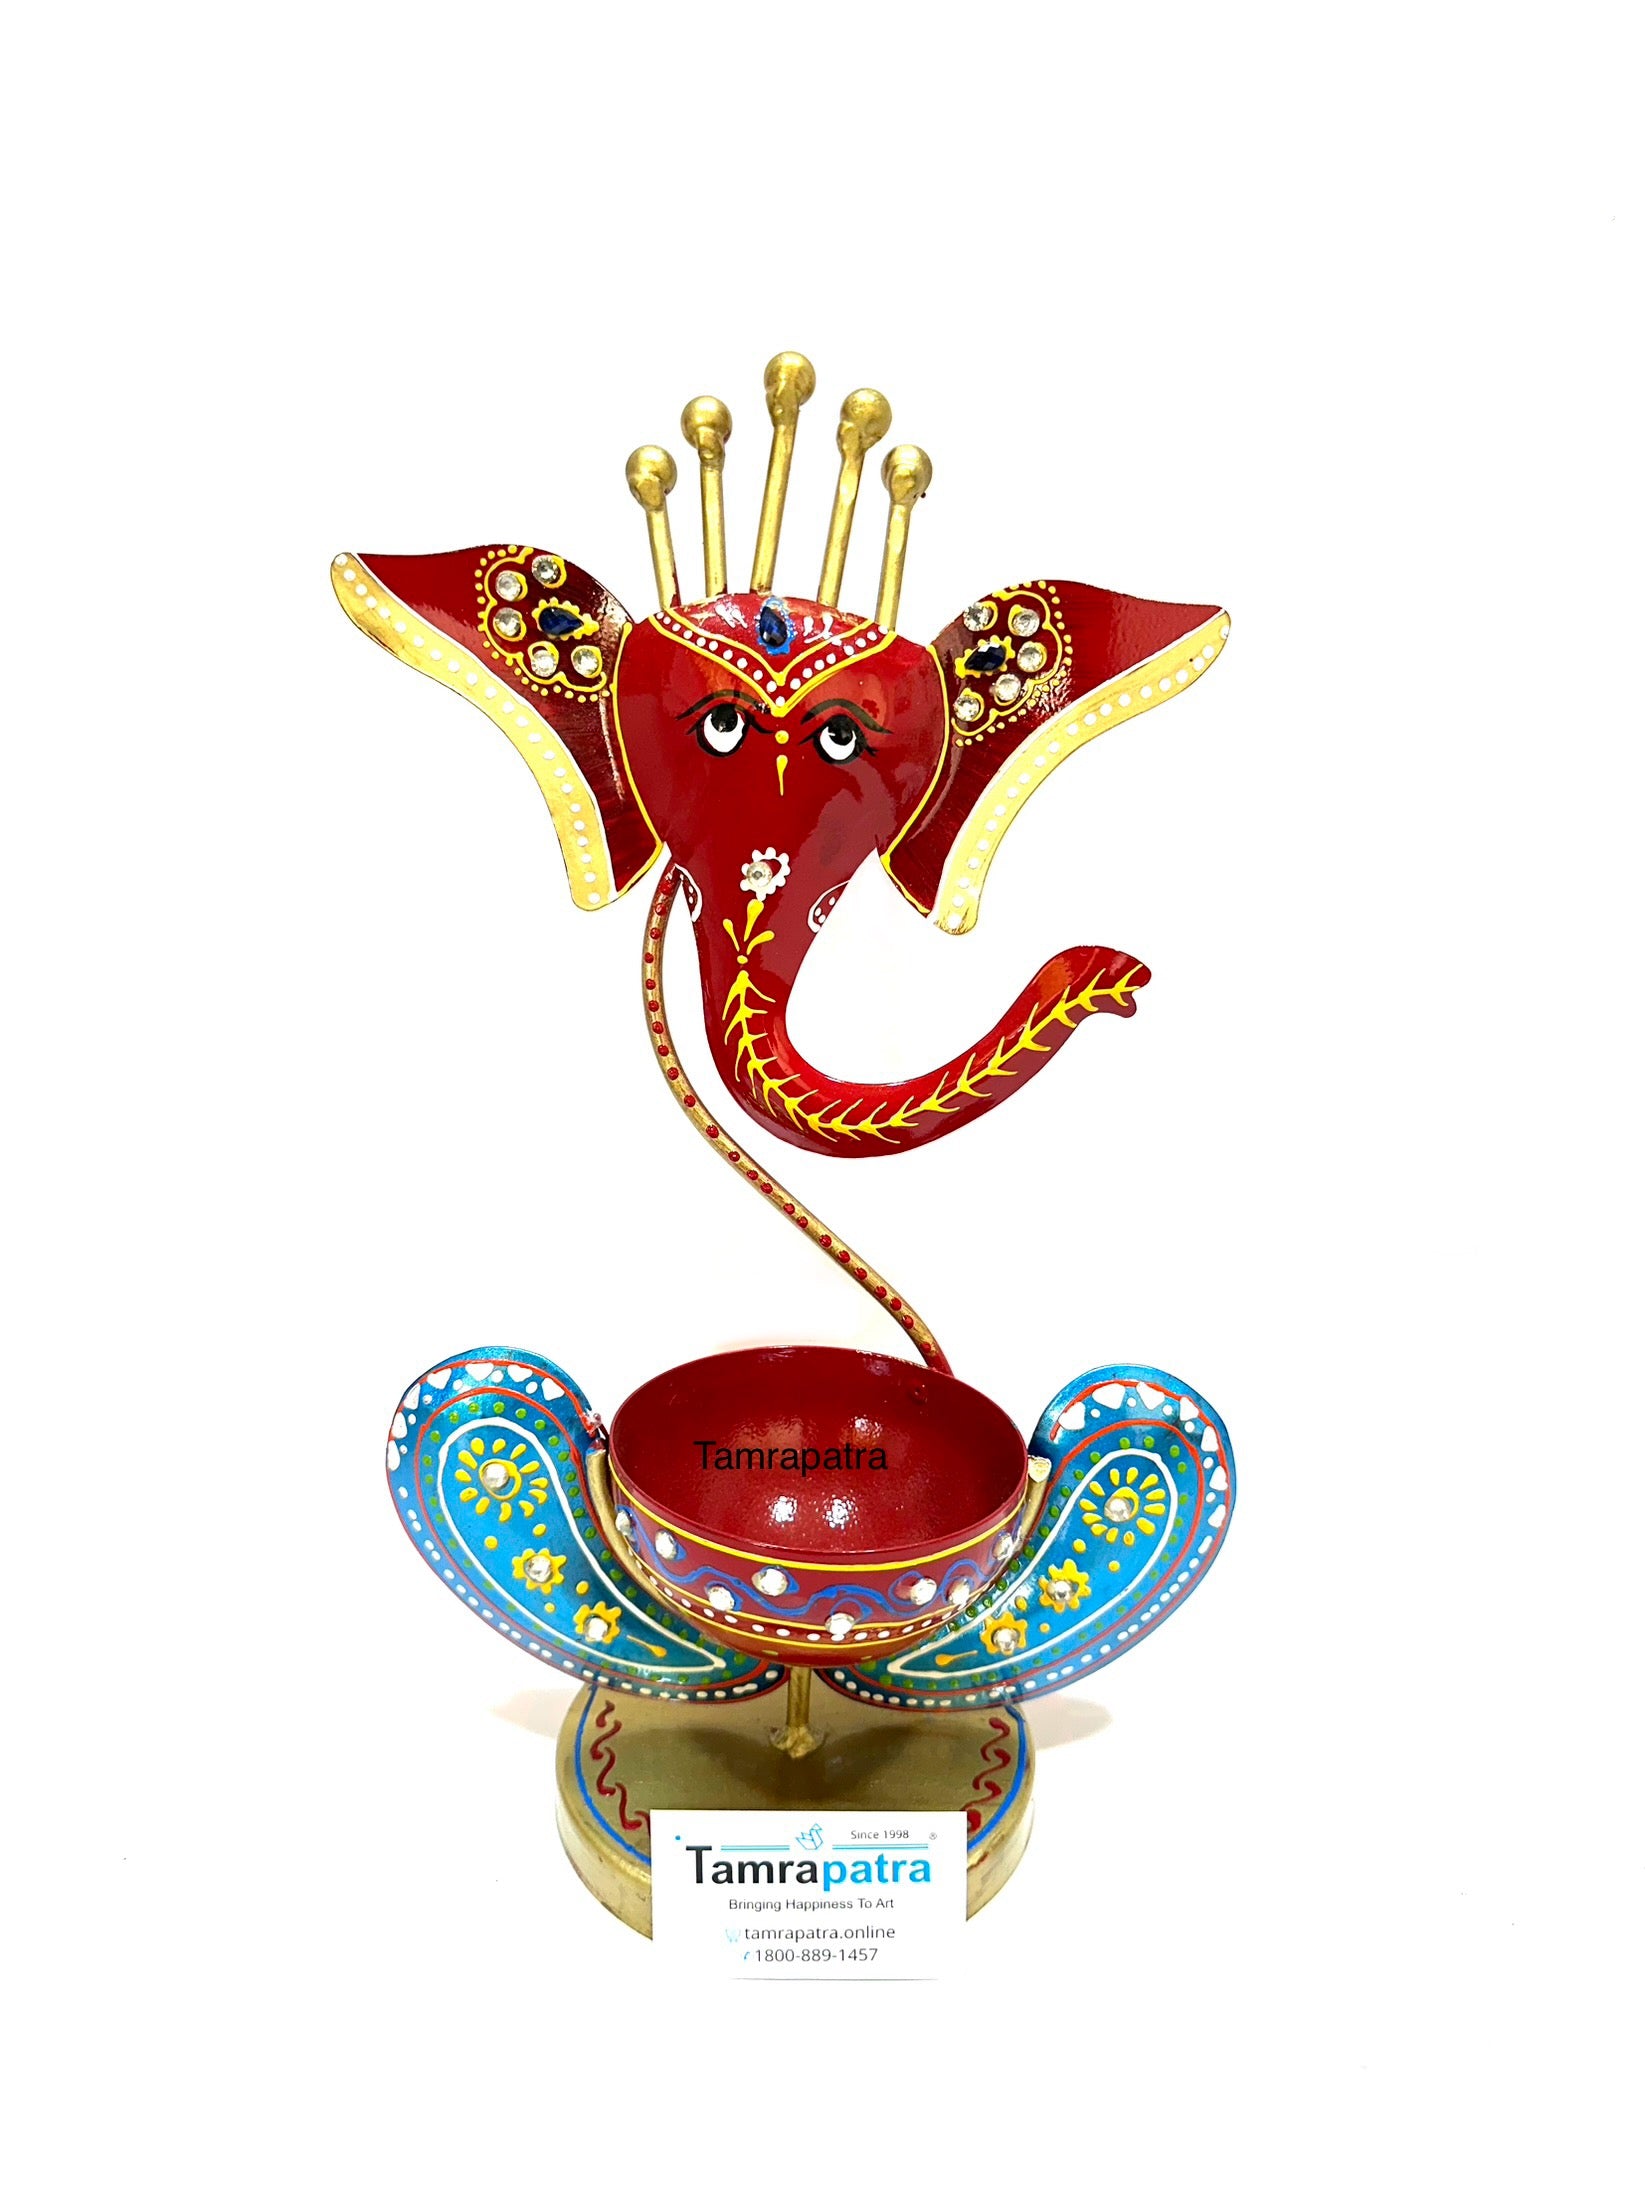 Ganesha Candle Holder With Handmade Eccentric Design Now At Tamrapatra - Tamrapatra